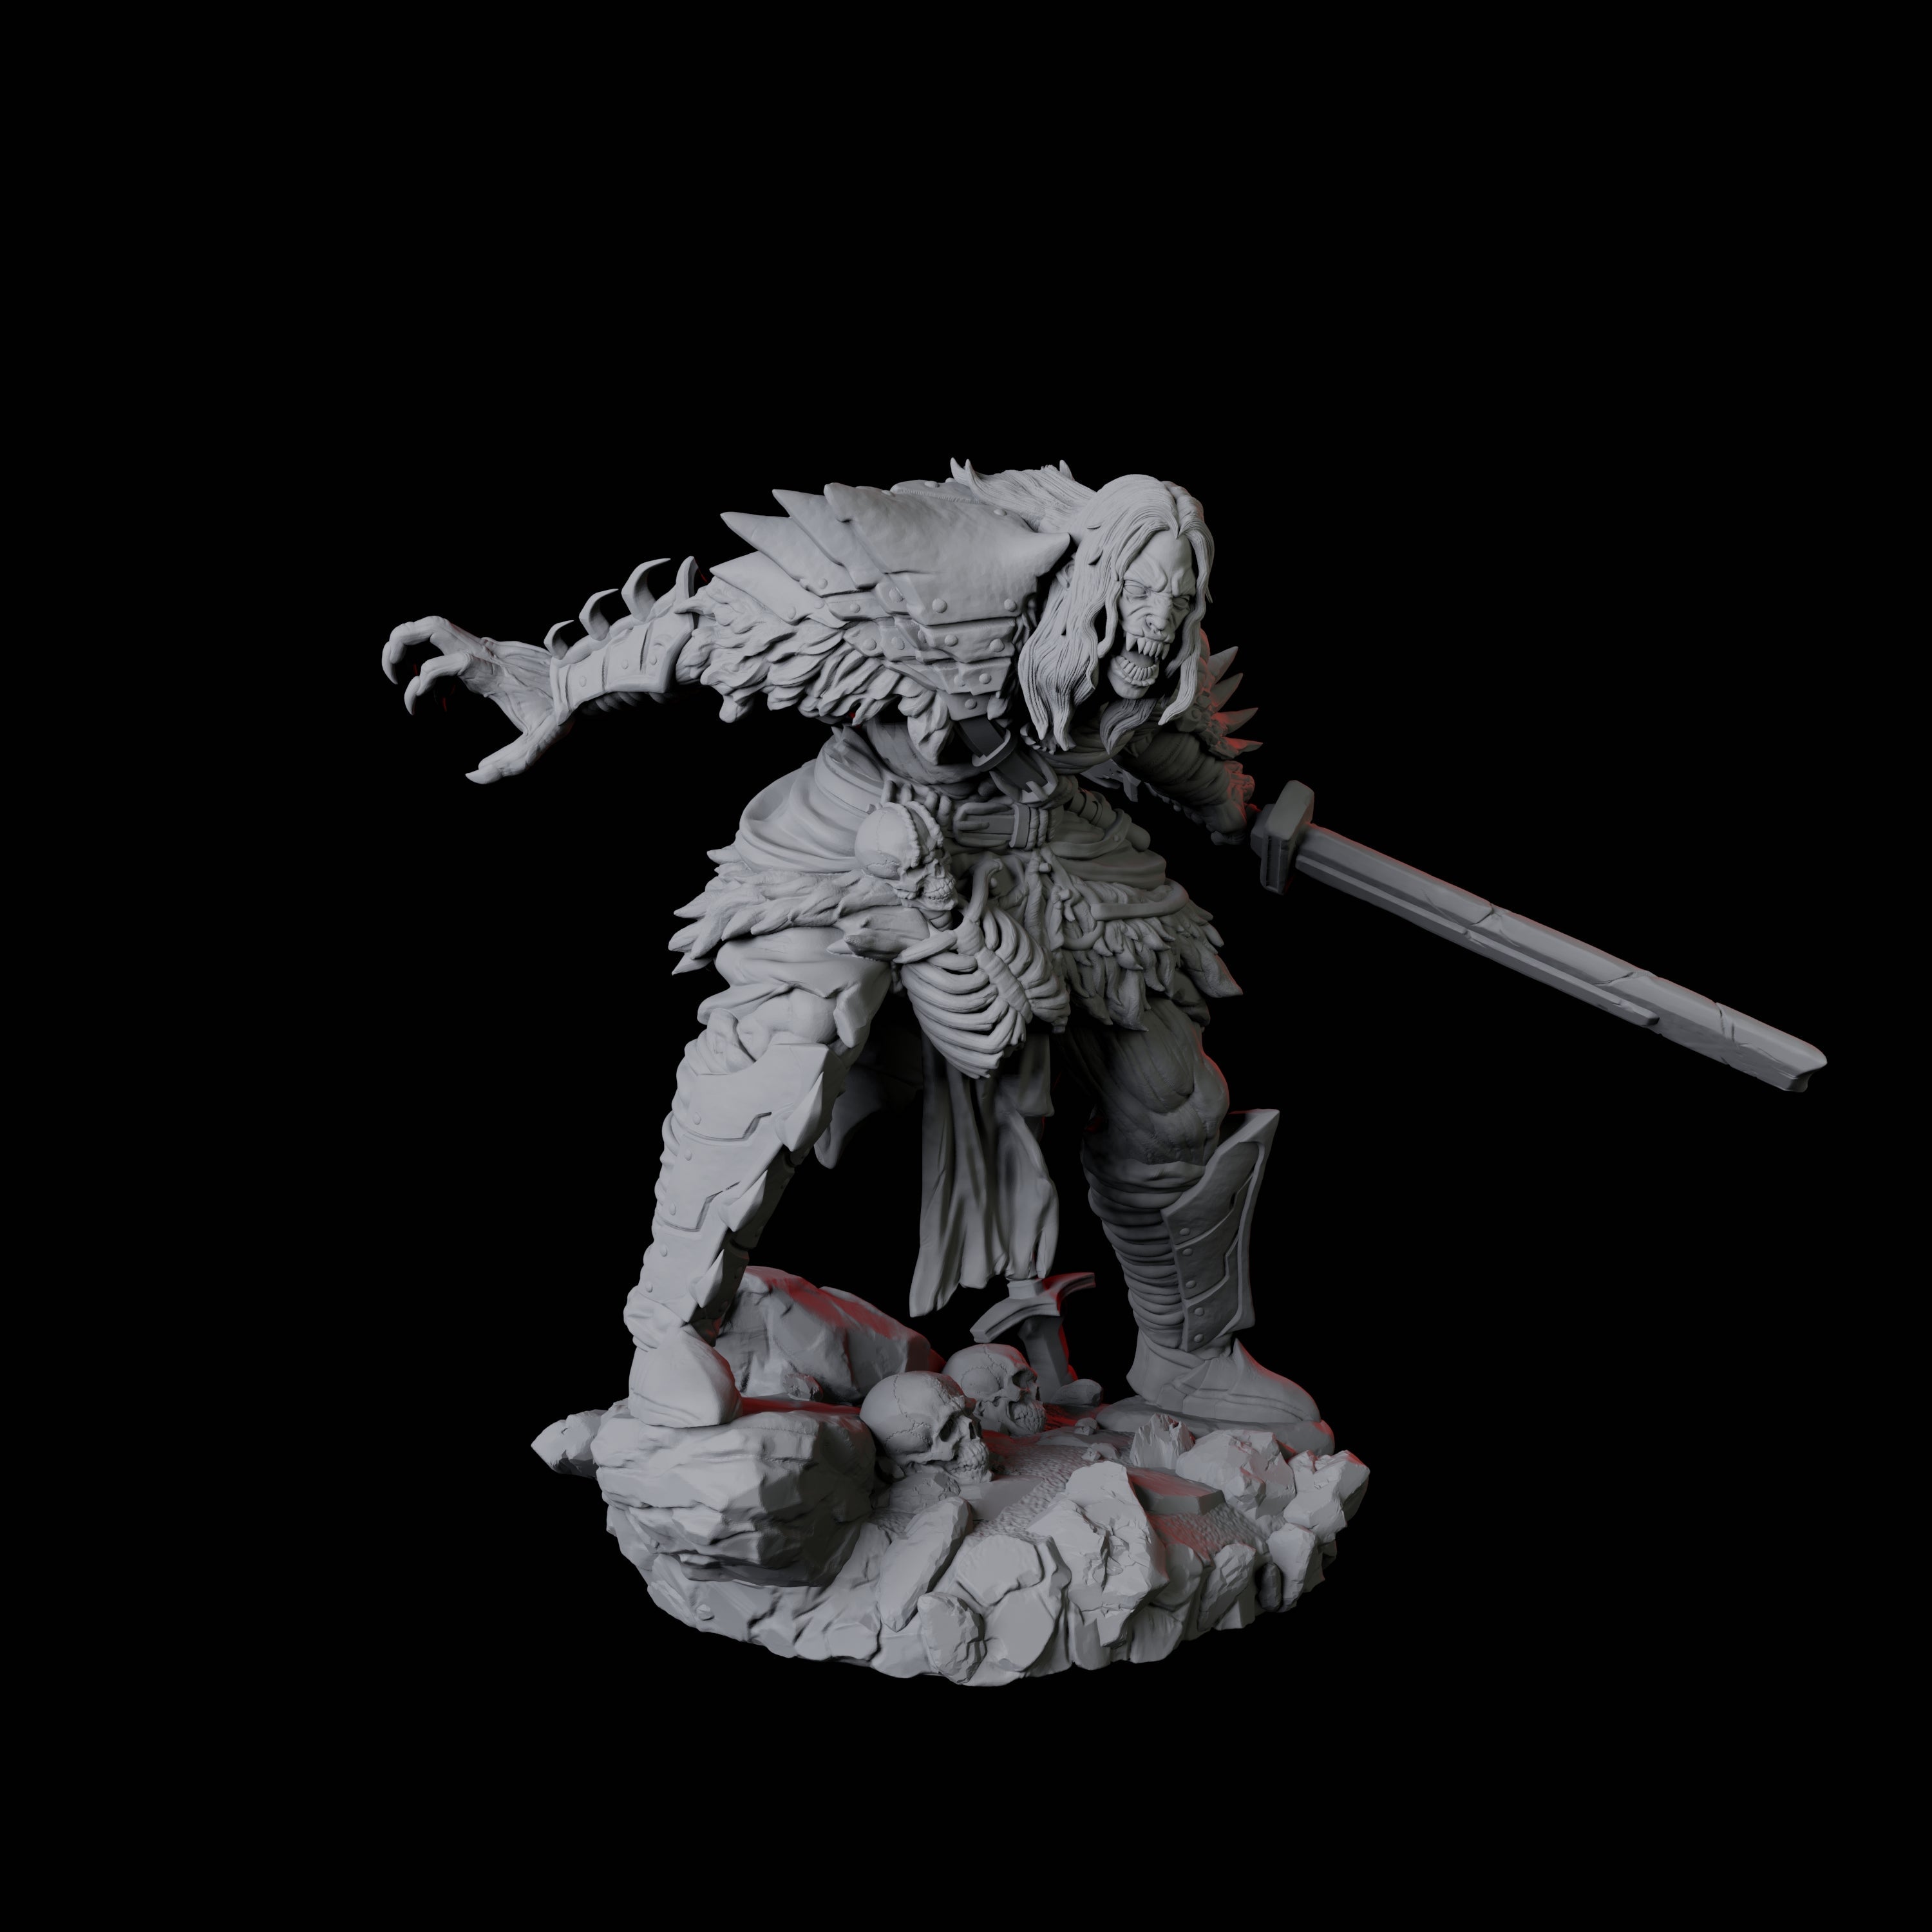 Stalking Urdefhan Warrior C Miniature for Dungeons and Dragons, Pathfinder or other TTRPGs